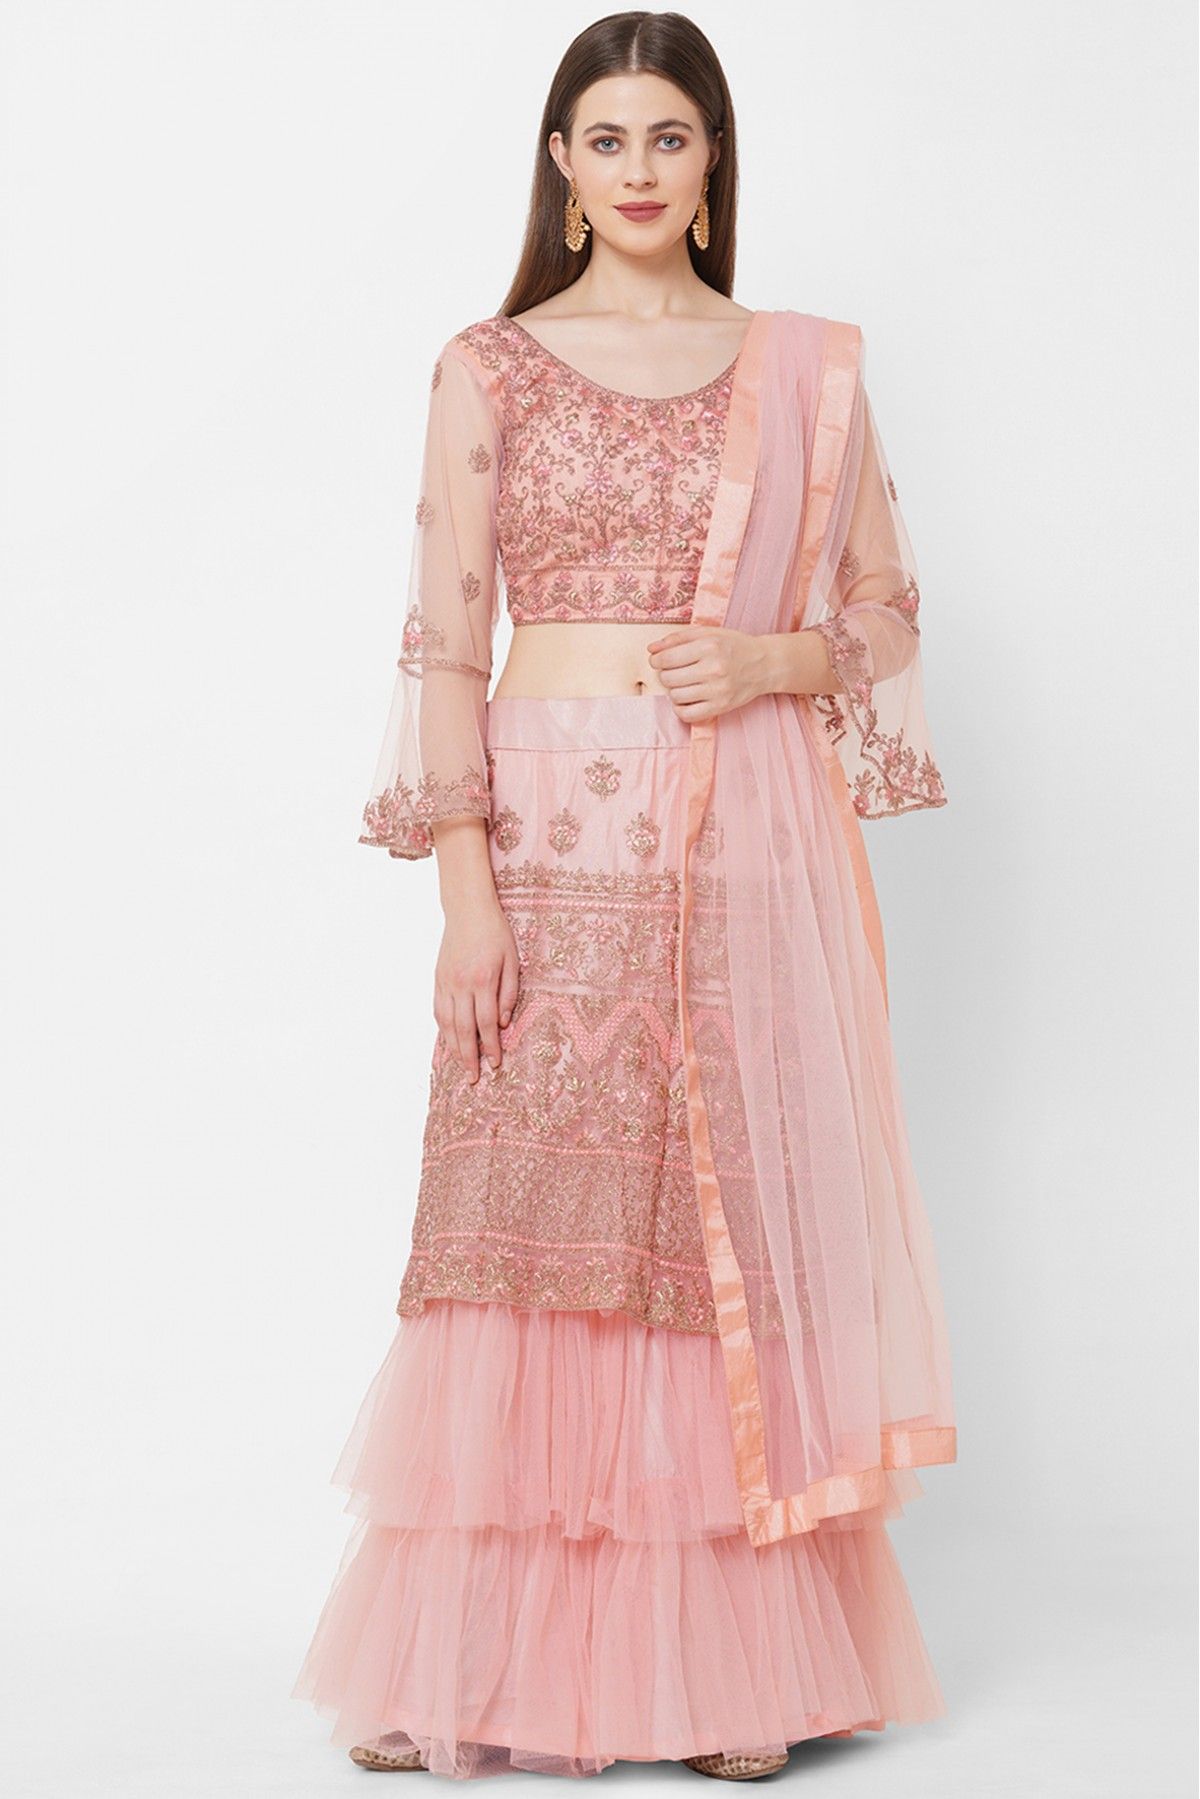 Net Embroidery Lehenga Choli In Pink Colour - LD5412991